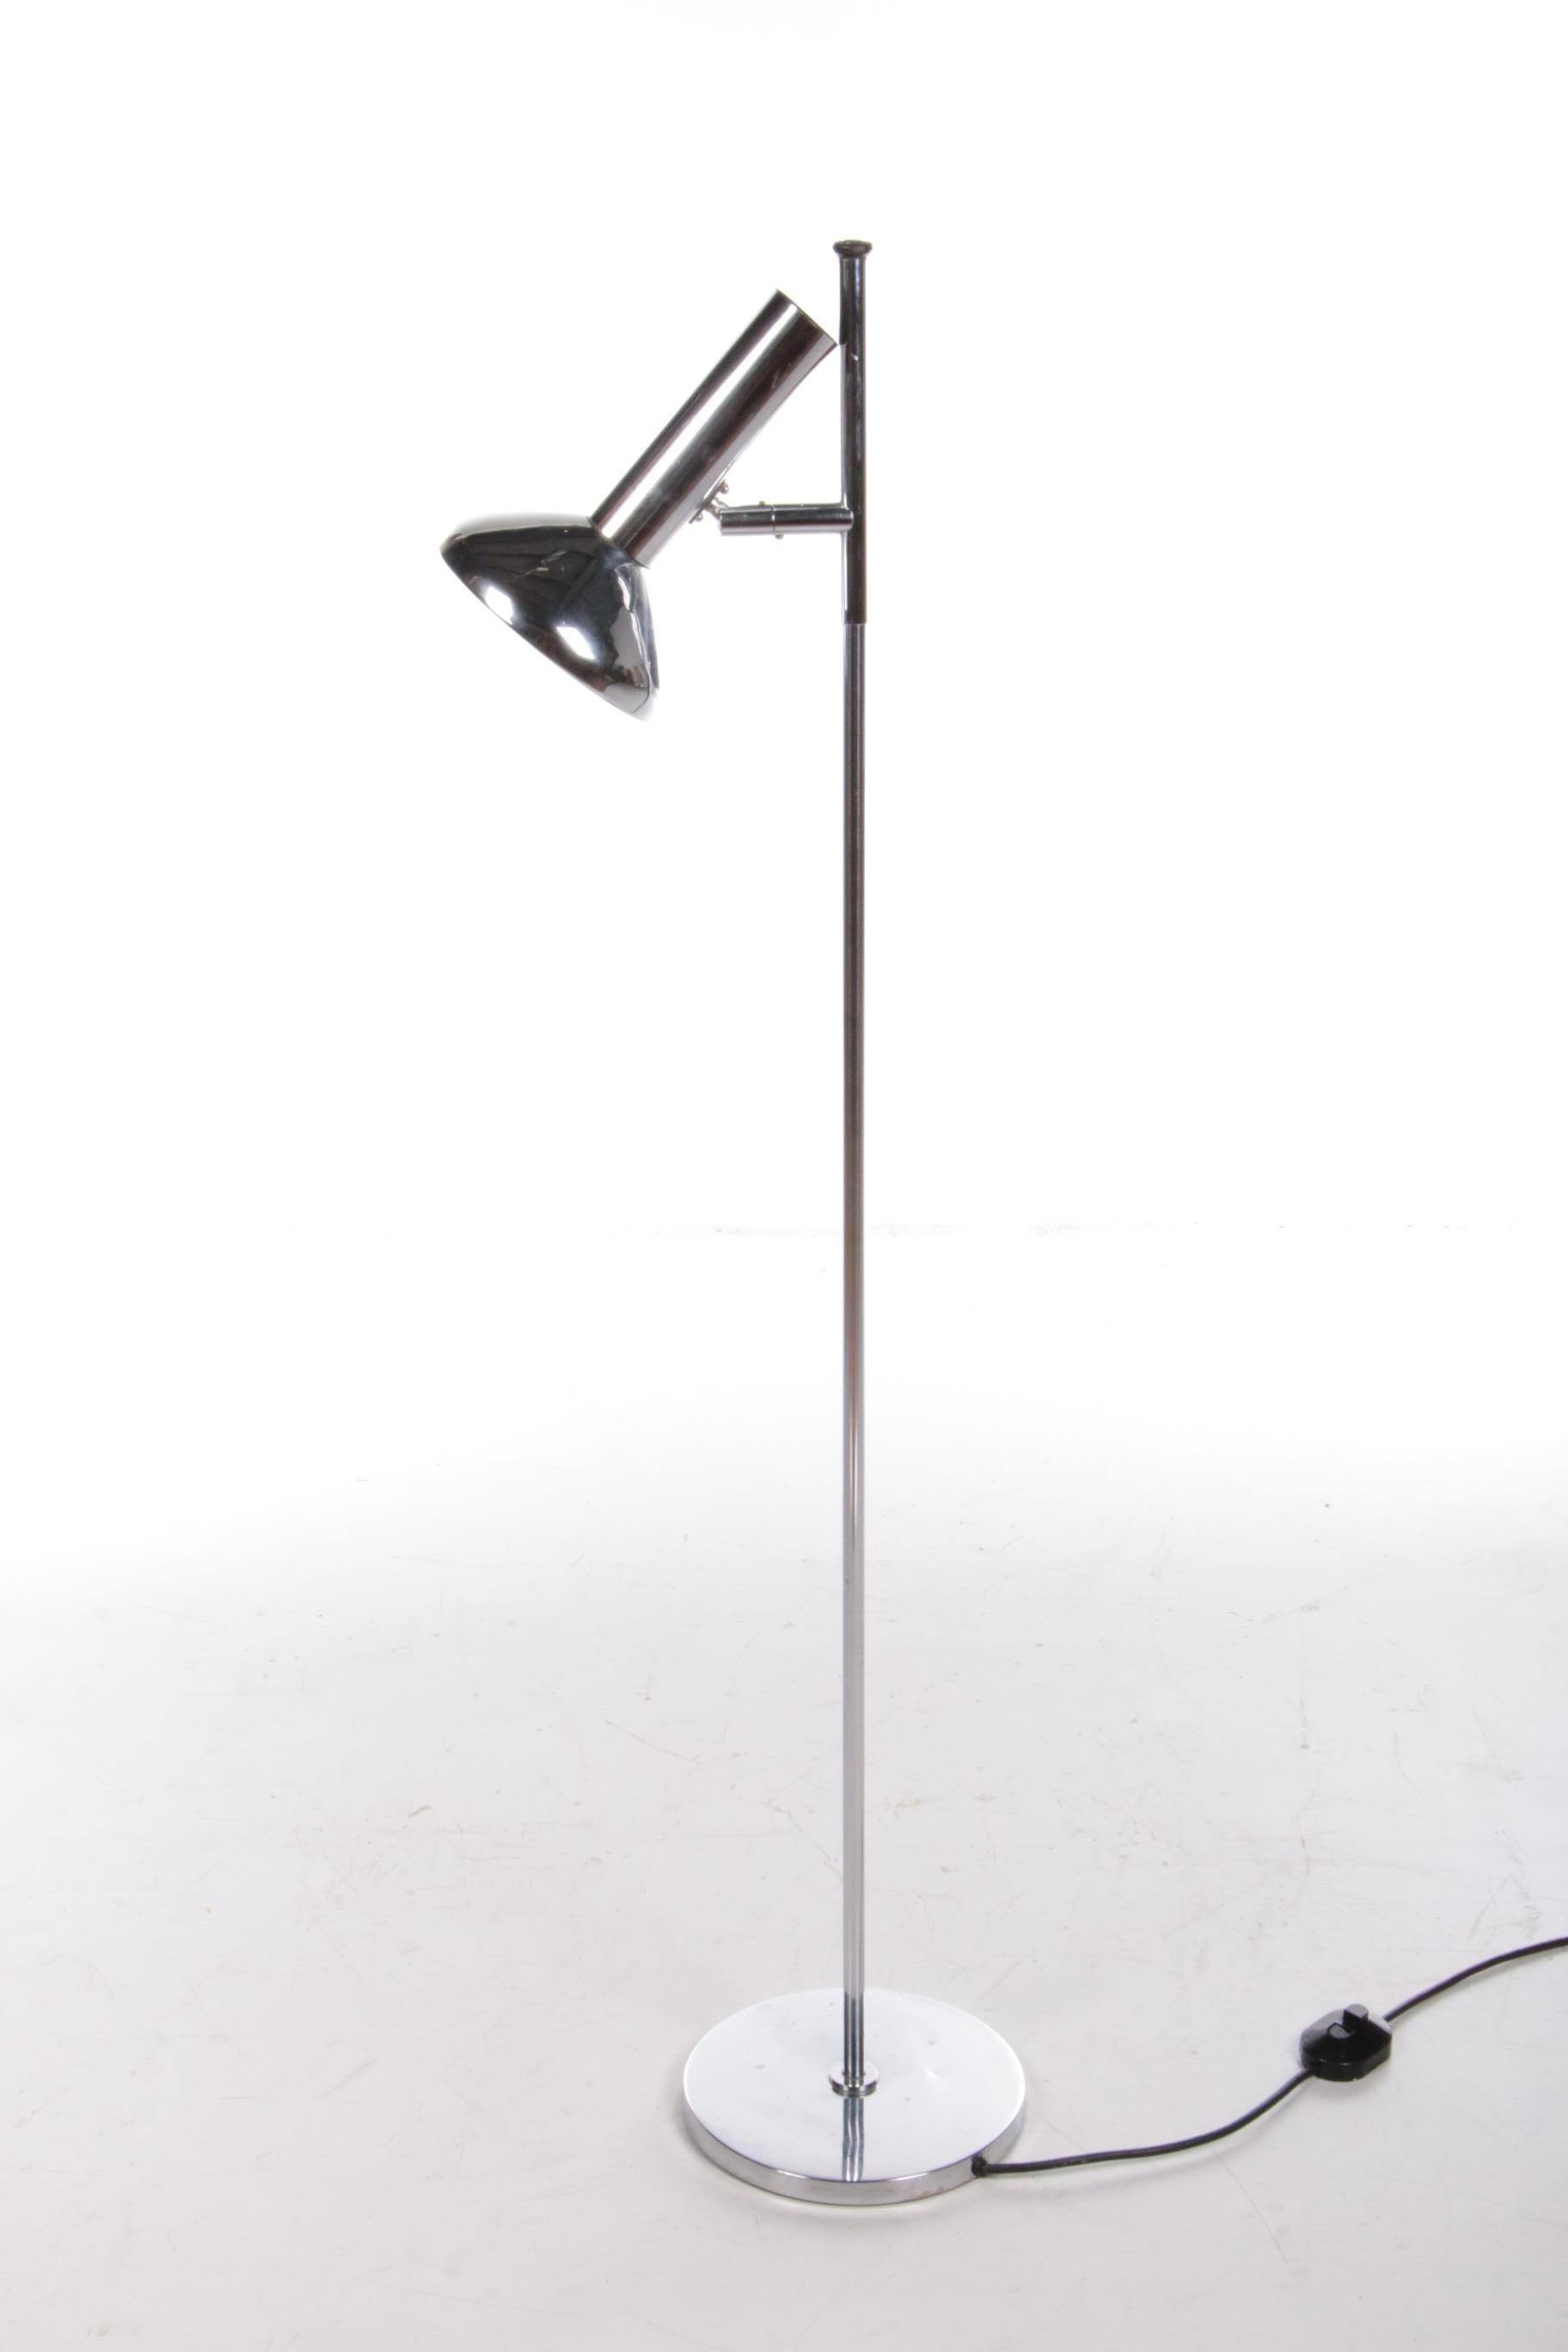 Metal Vintage Chrome Floor Lamp with Adjustable Spot, 1960s German